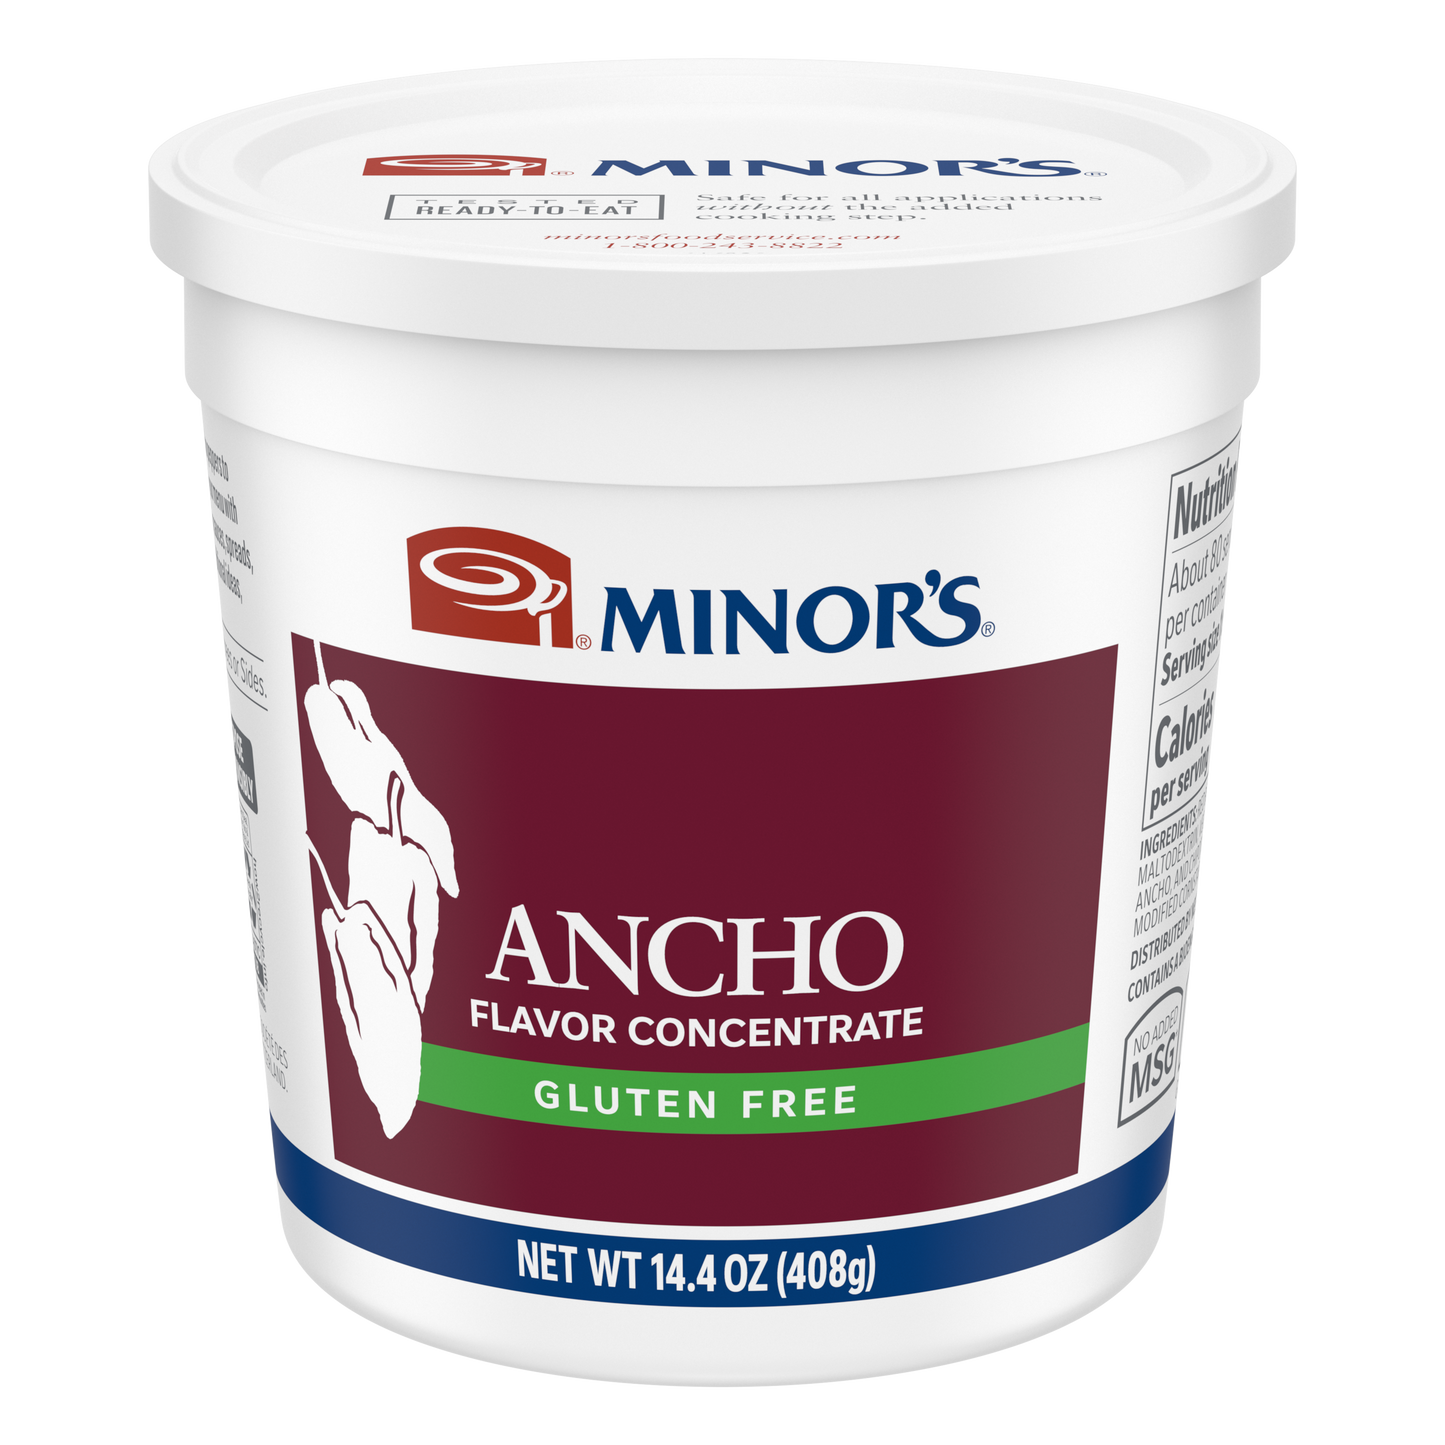 Minor's Ancho Flavor Concentrate - 14.4 oz - #680